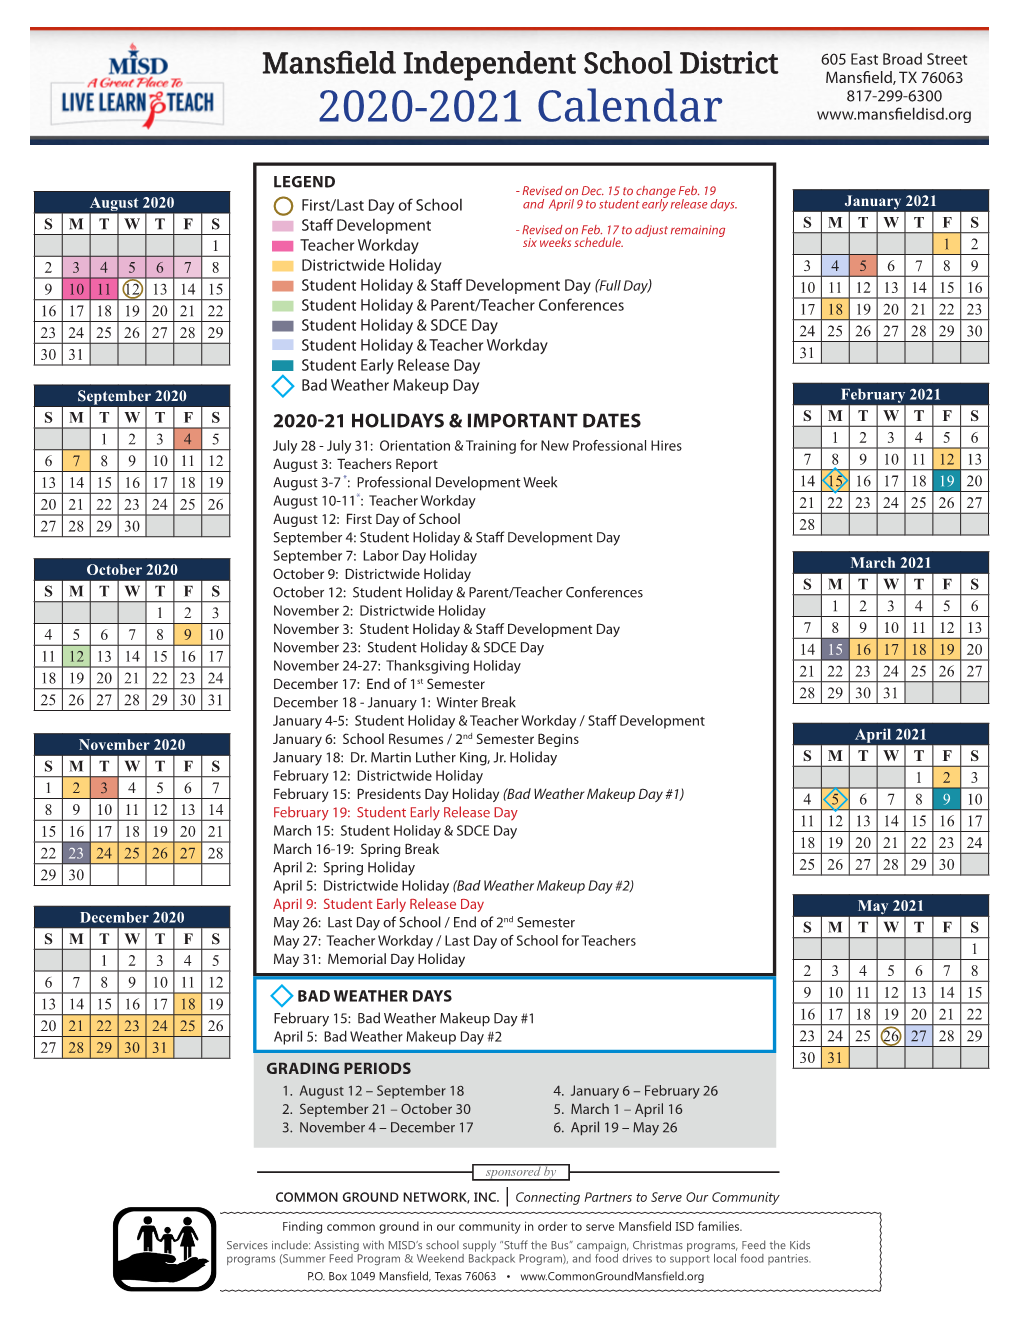 Mansfield Independent School District 2020-2021 Calendar